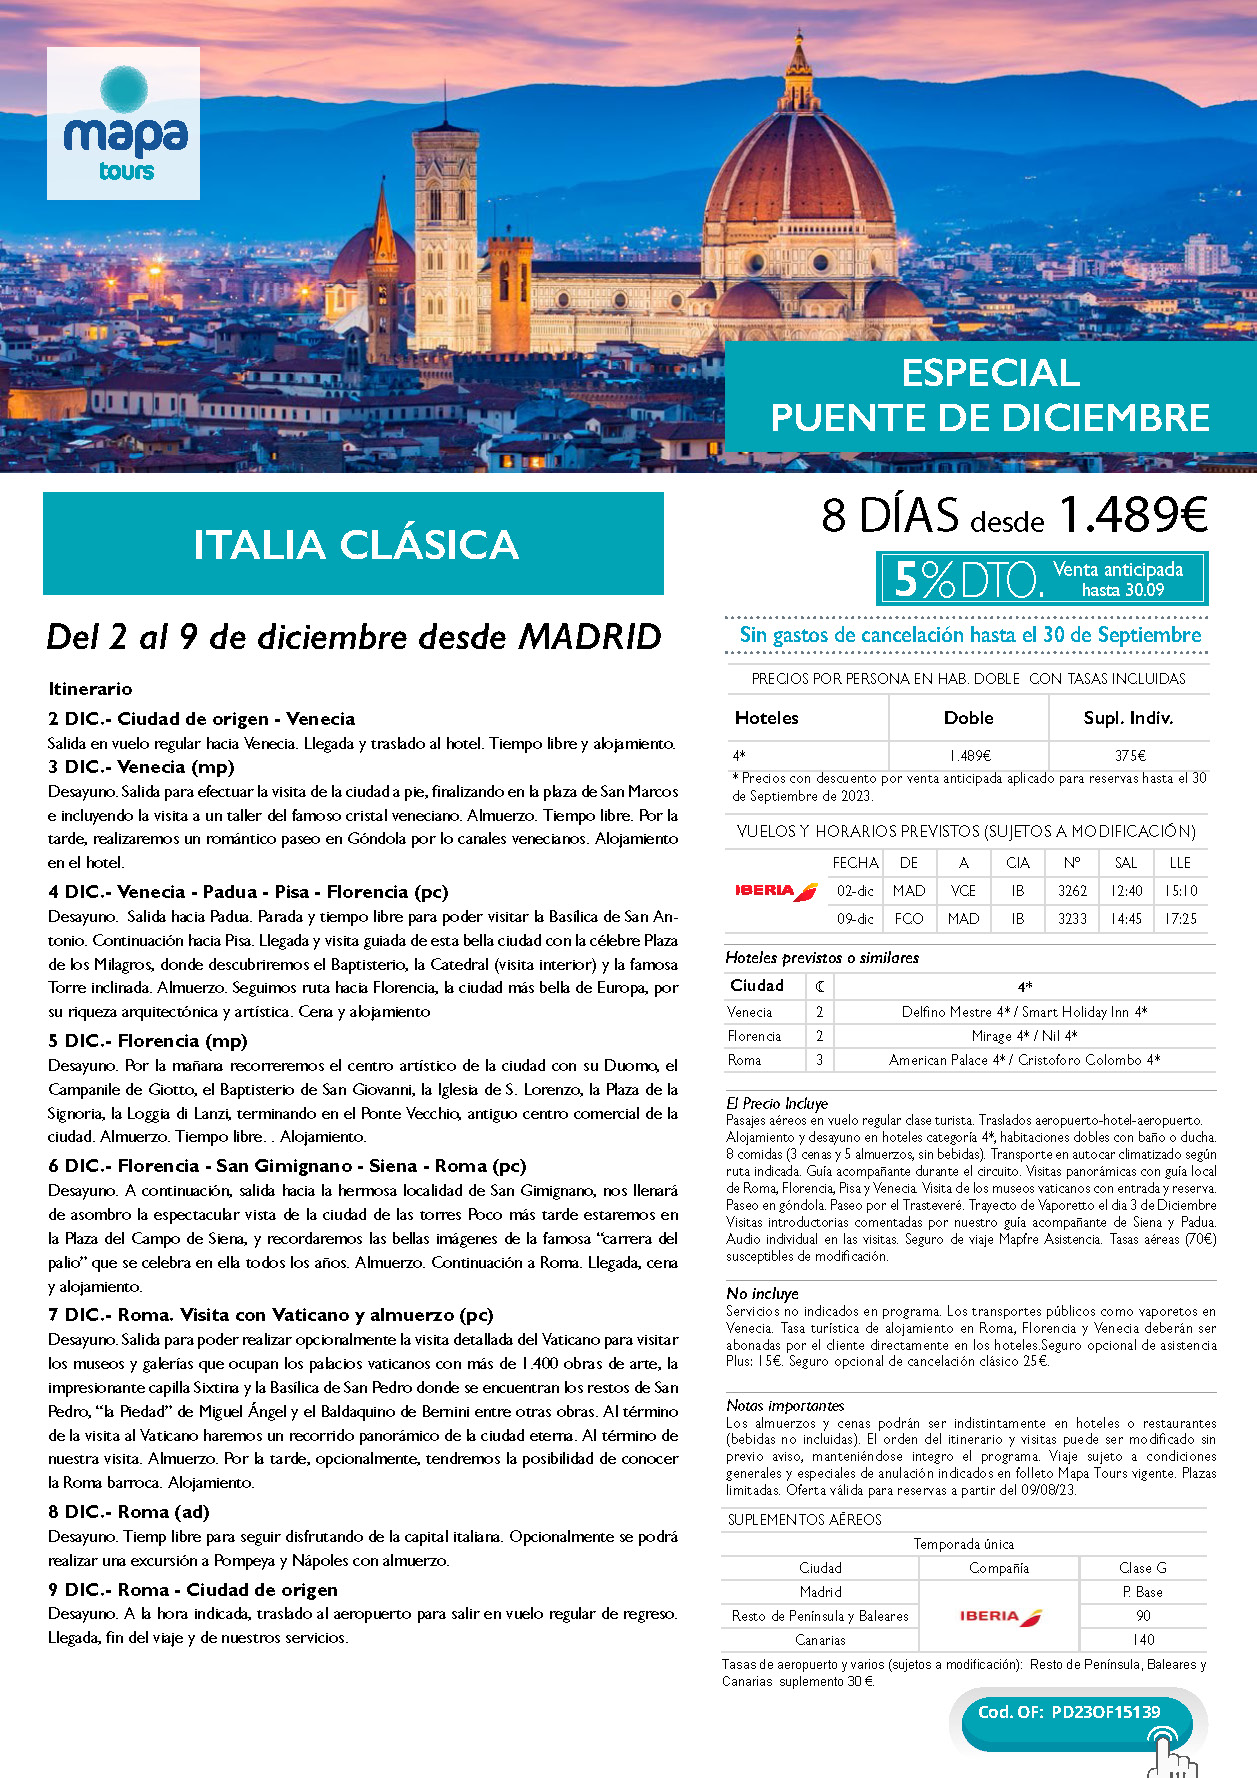 Oferta Mapa Tours Puente de Diciembre 2023 circuito Italia Clasica 8 dias salida 2 de diciembre en vuelo directo desde Madrid